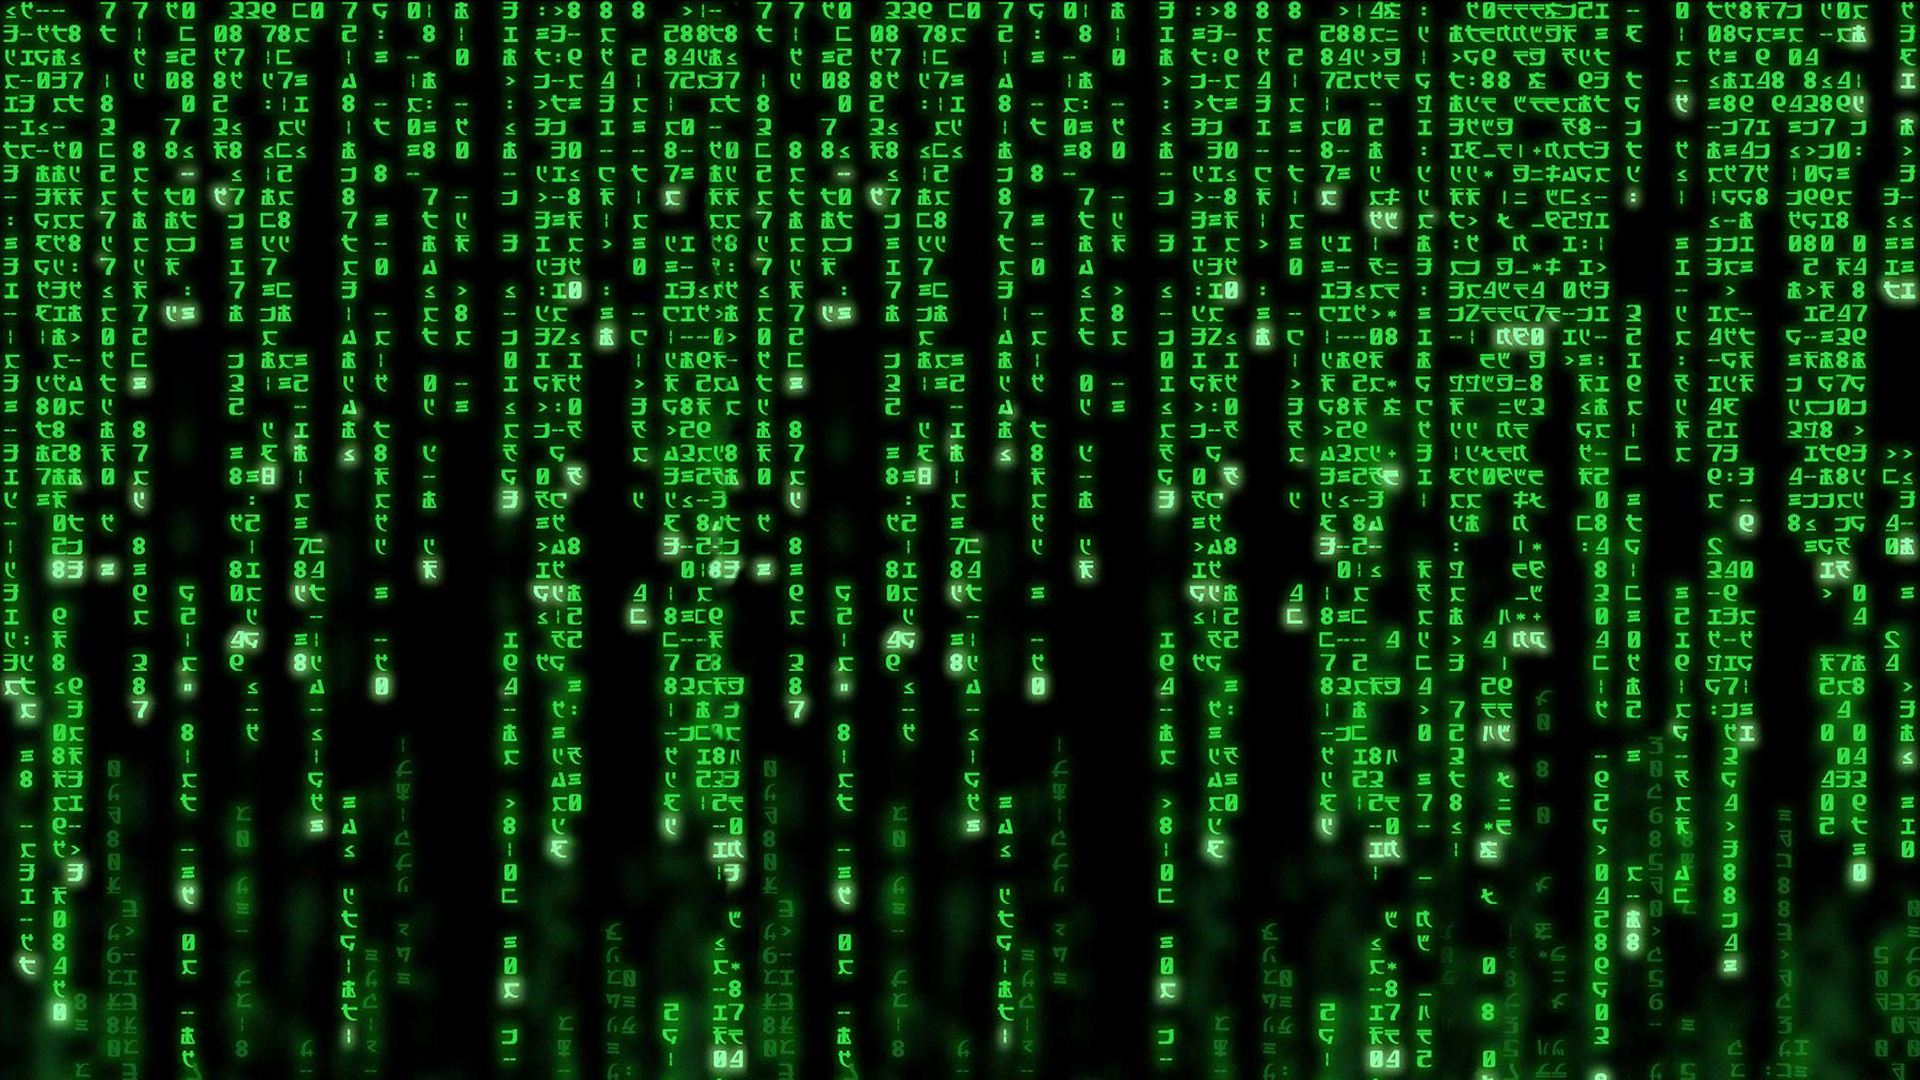 The Matrix digital rain - Virtual Backgrounds